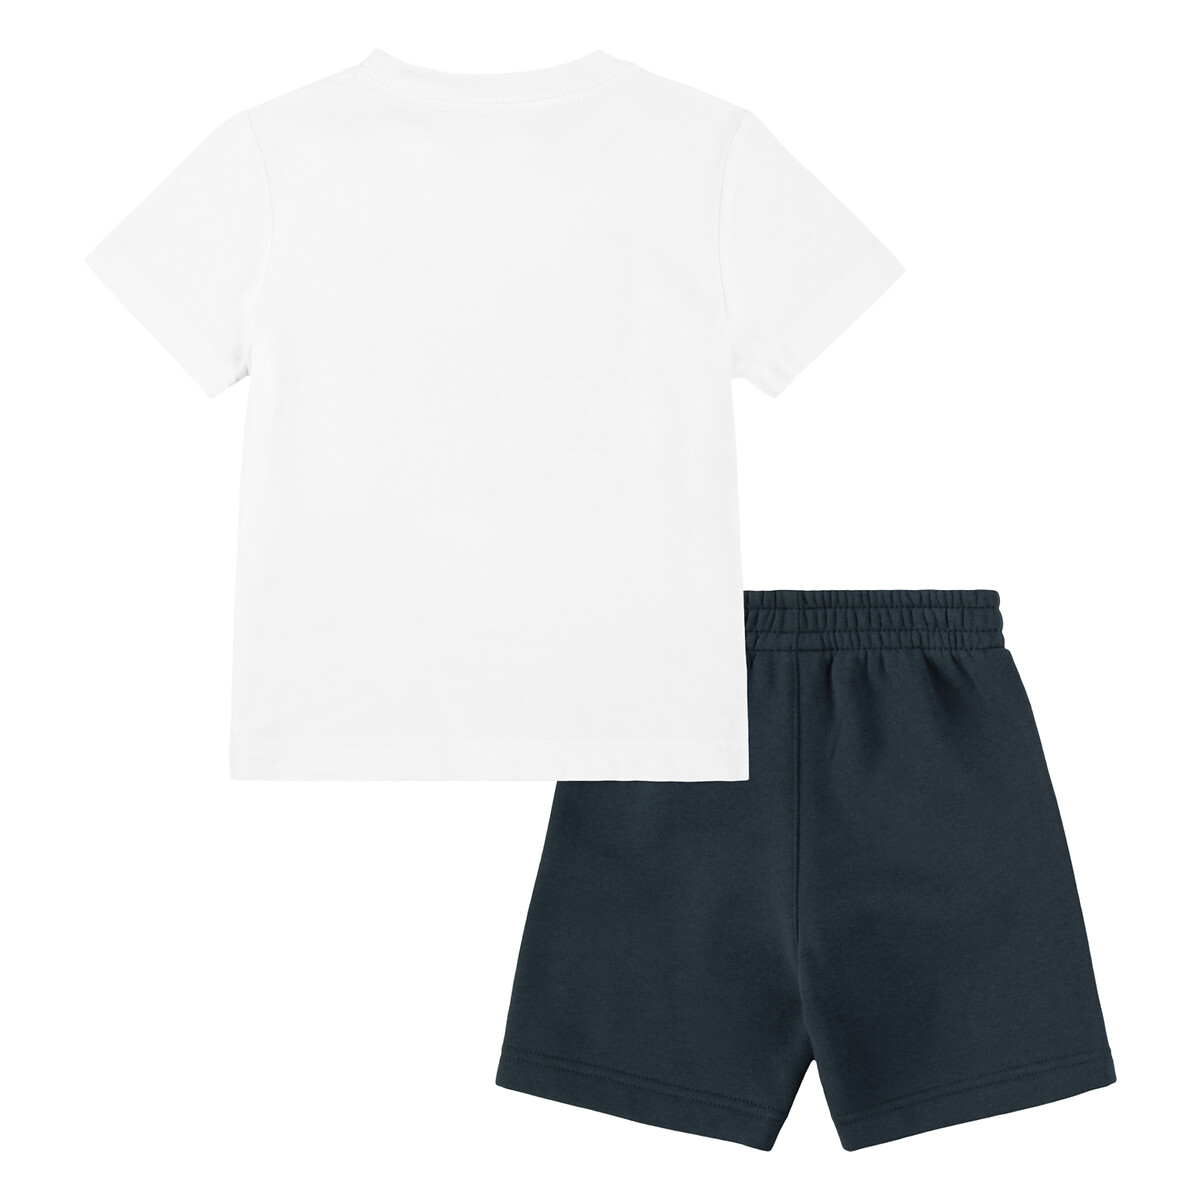 Cotton mix t-shirt/shorts outfit, white + grey, Nike | La Redoute